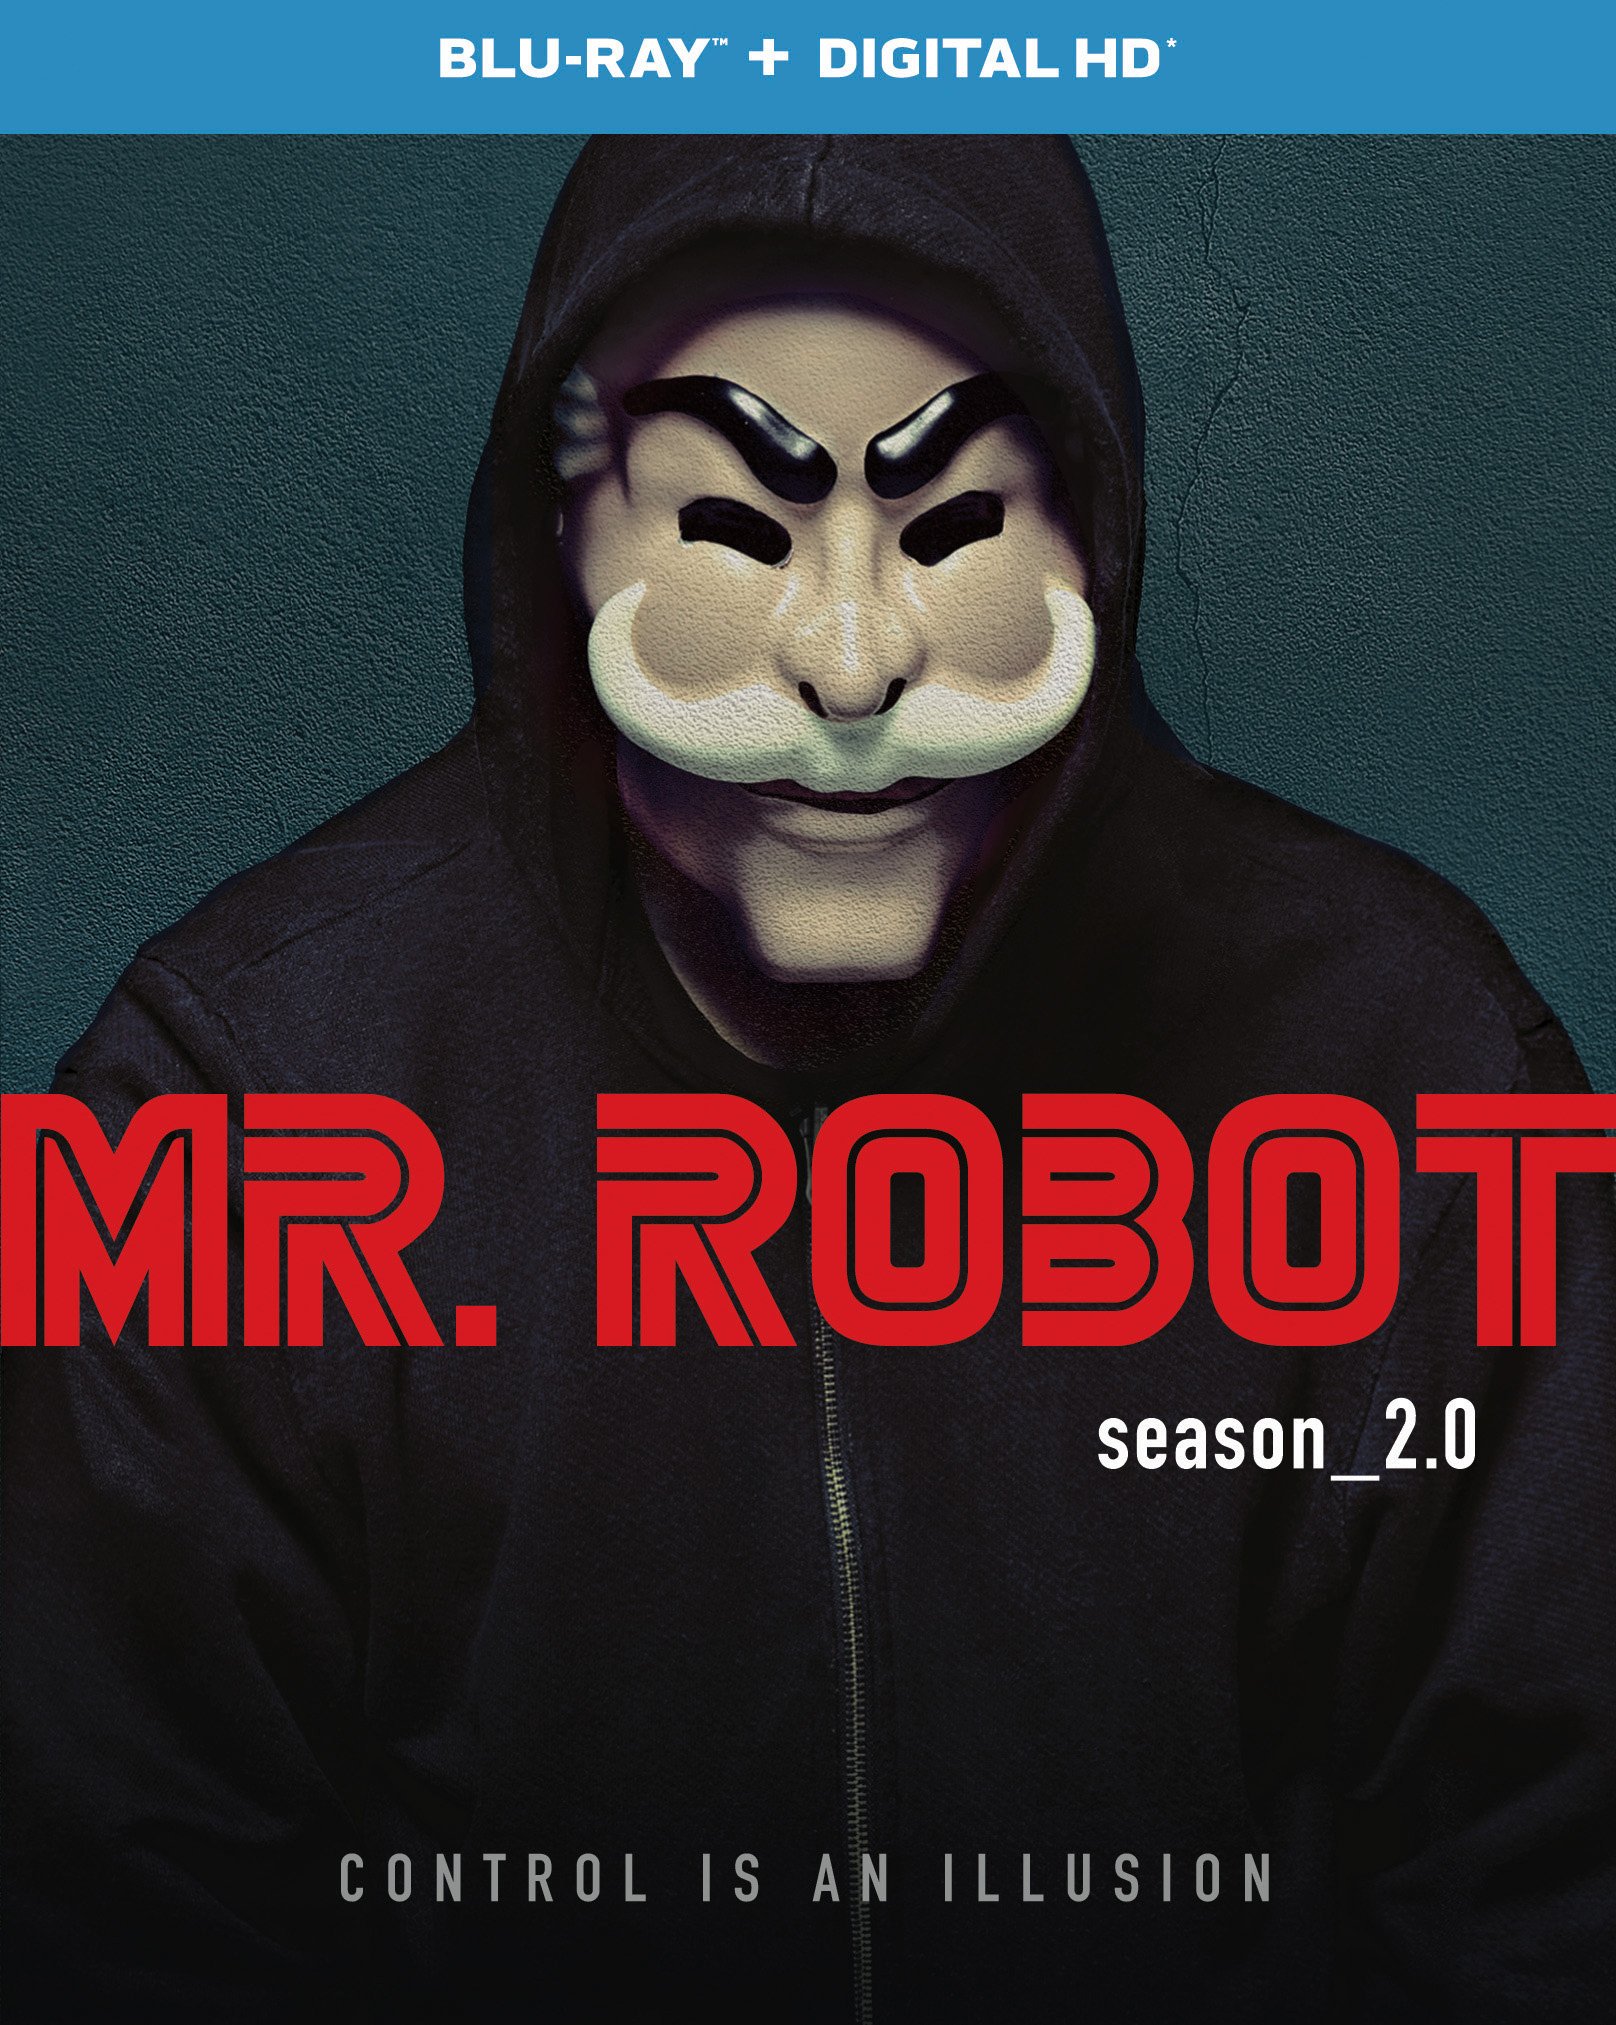 Mr. Robot DVD Release Date